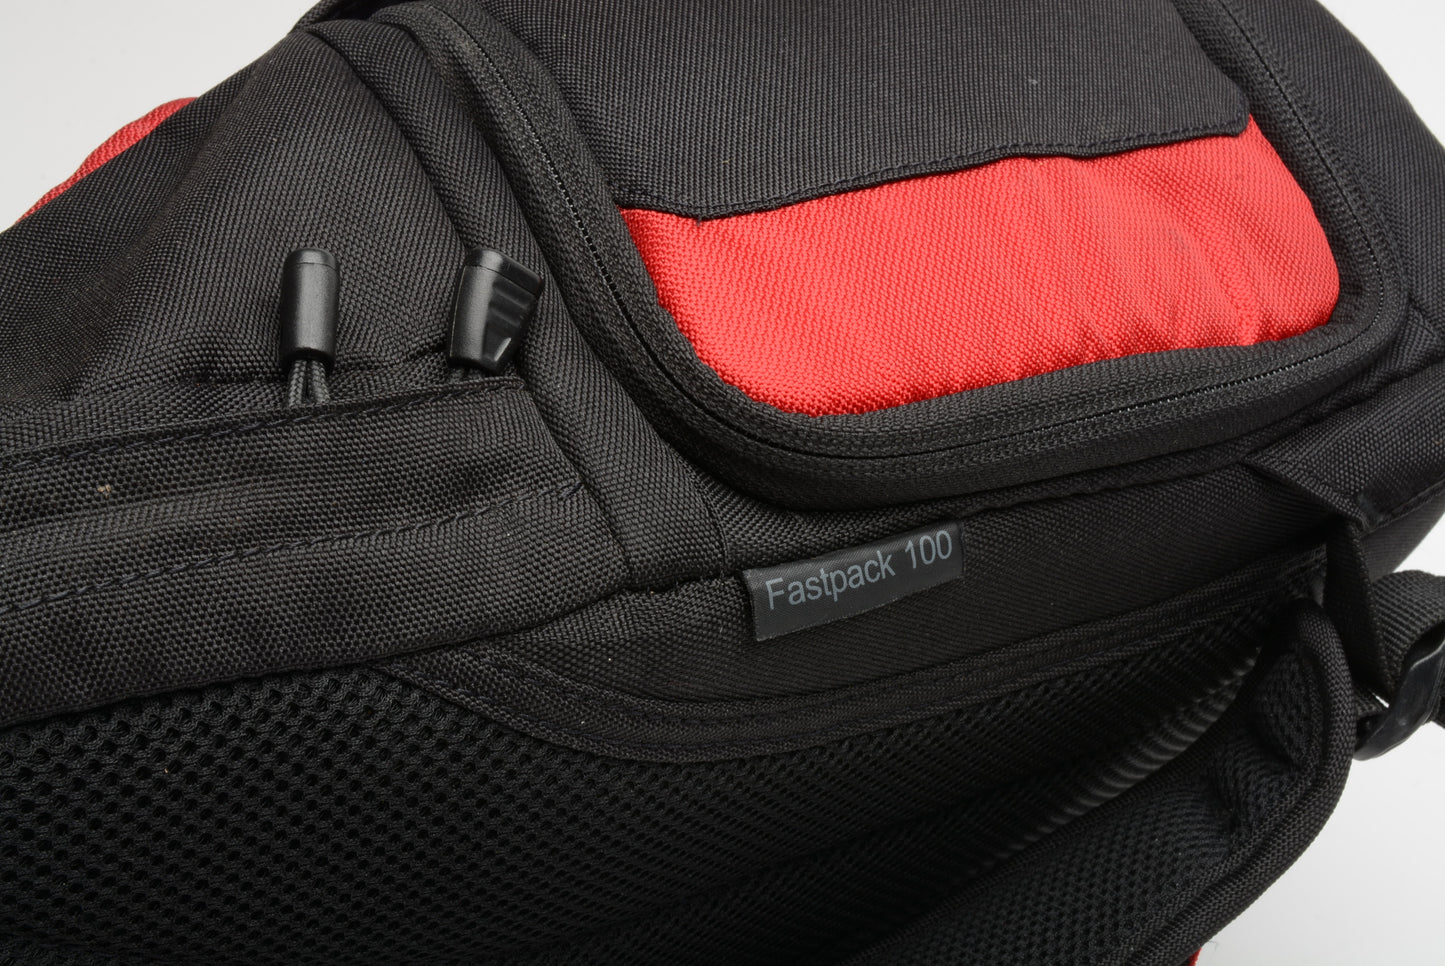 Lowepro Fastpack 100 (Red/Black) Sling Pack, very clean, lightly used